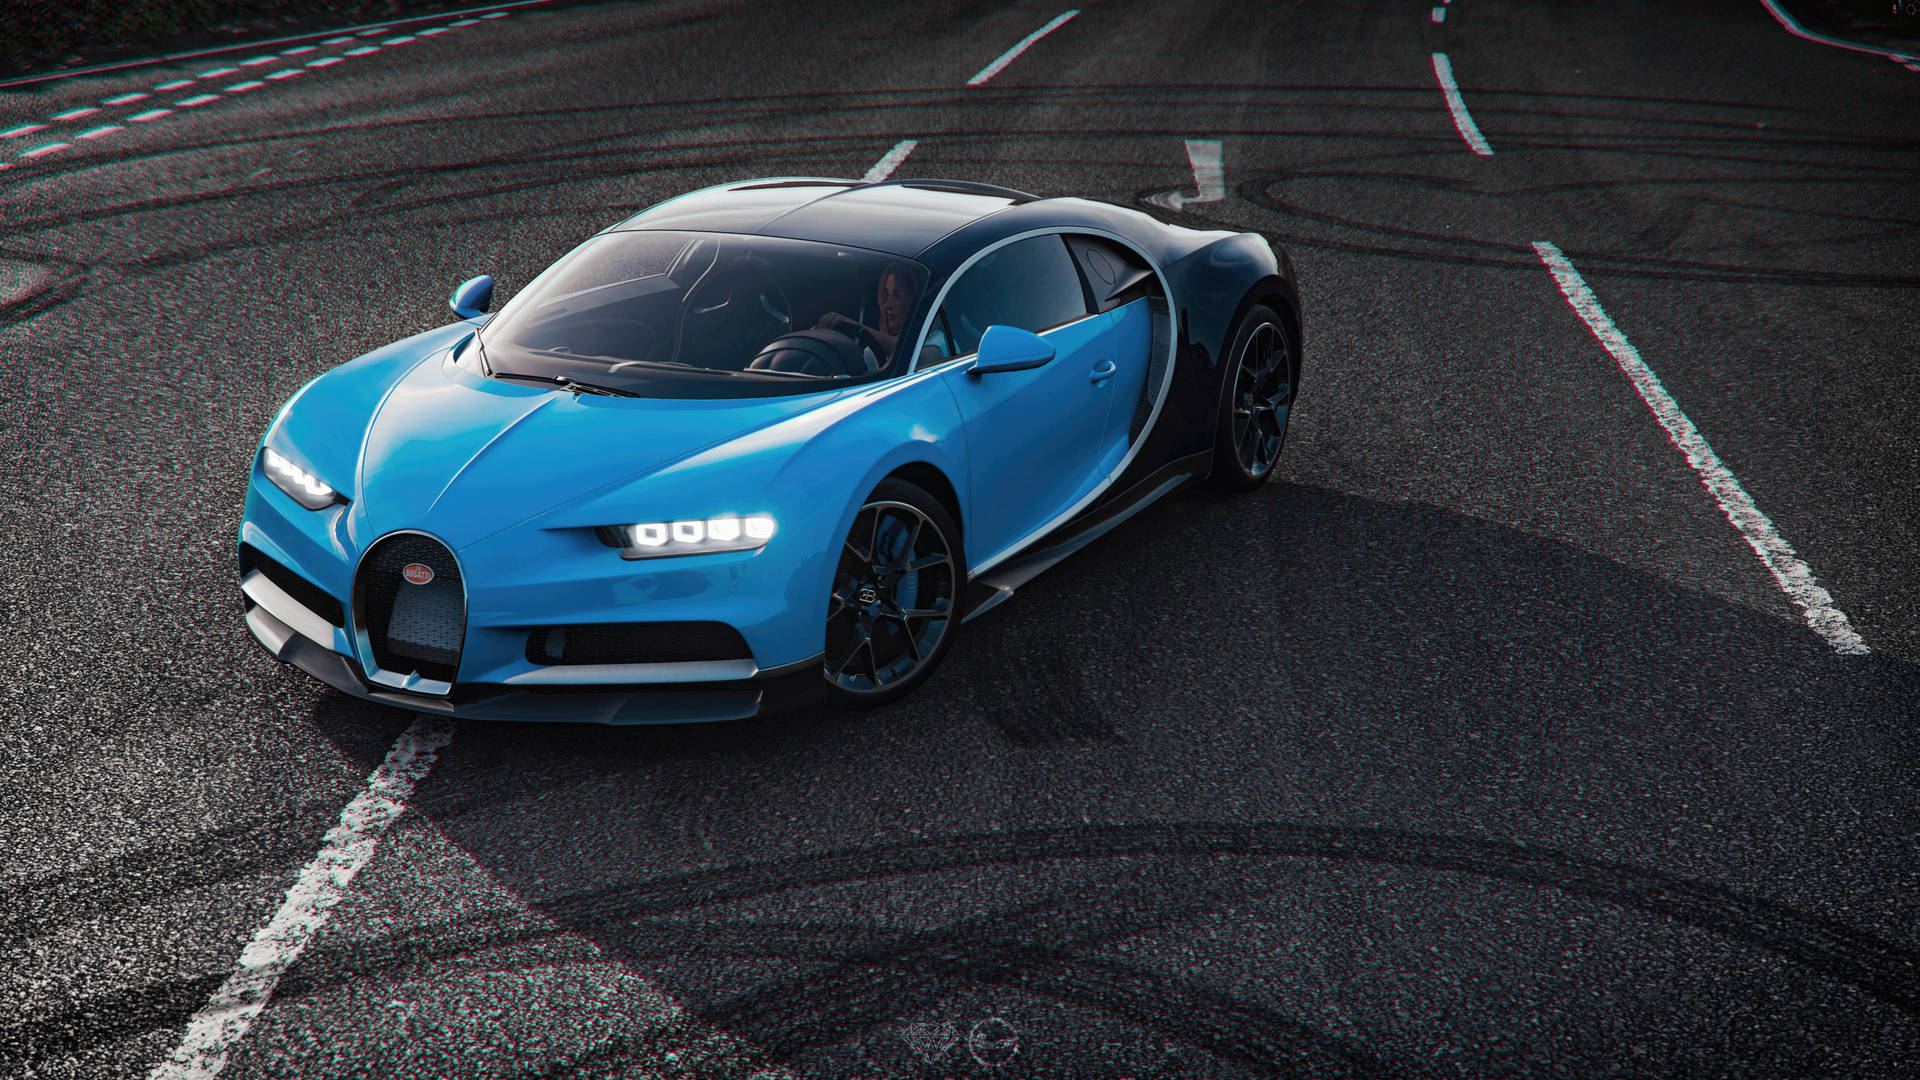 Stunning Bugatti Chiron Immersion in Forza Horizon 4 Gameplay Wallpaper